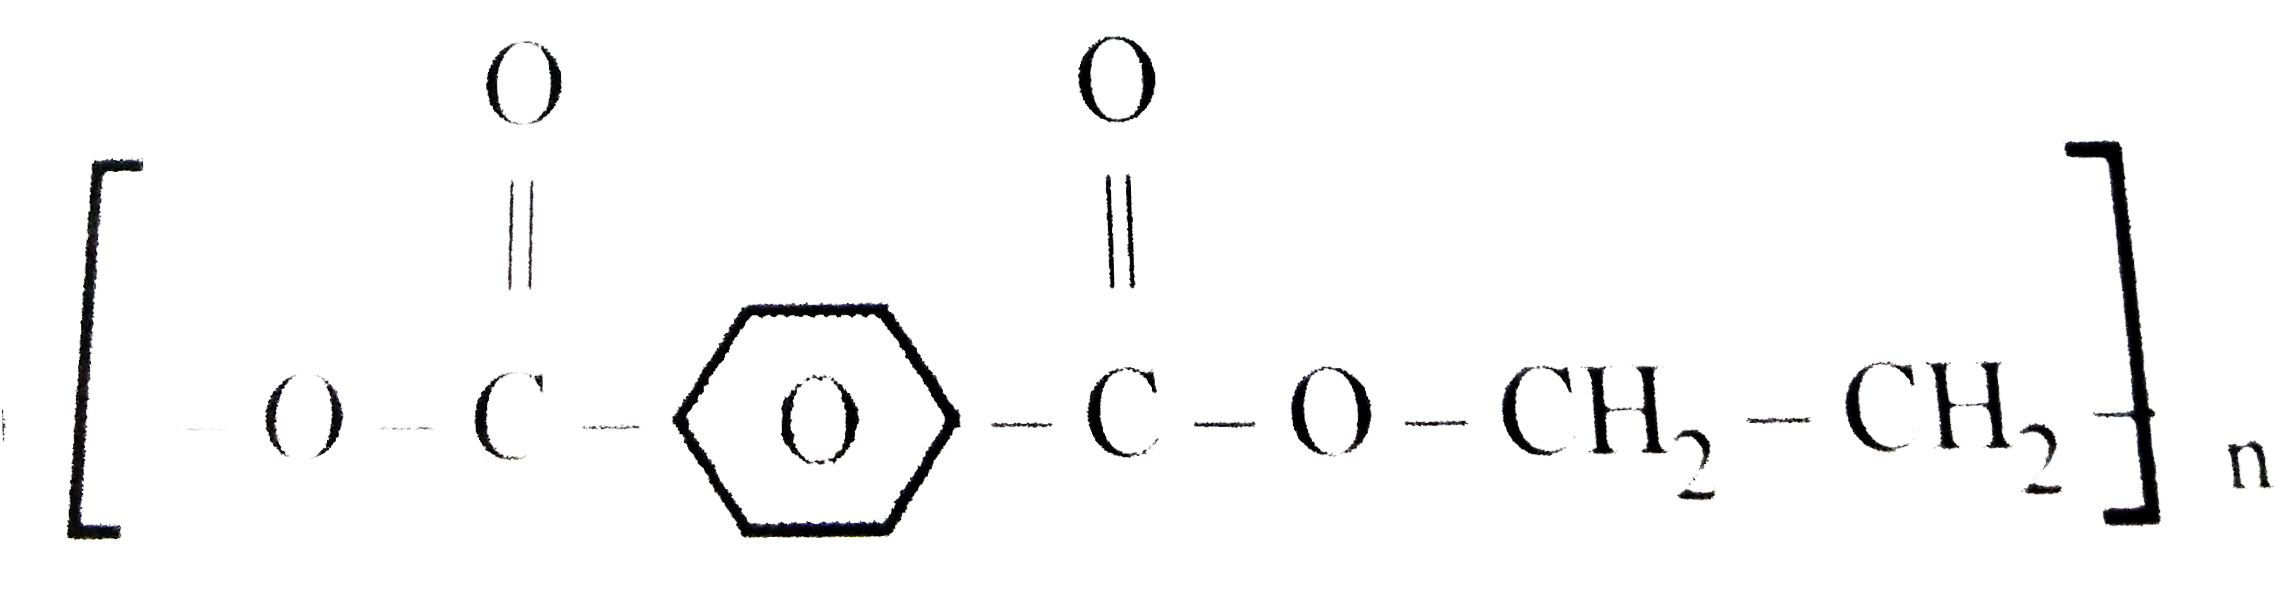 structural formula of terylene